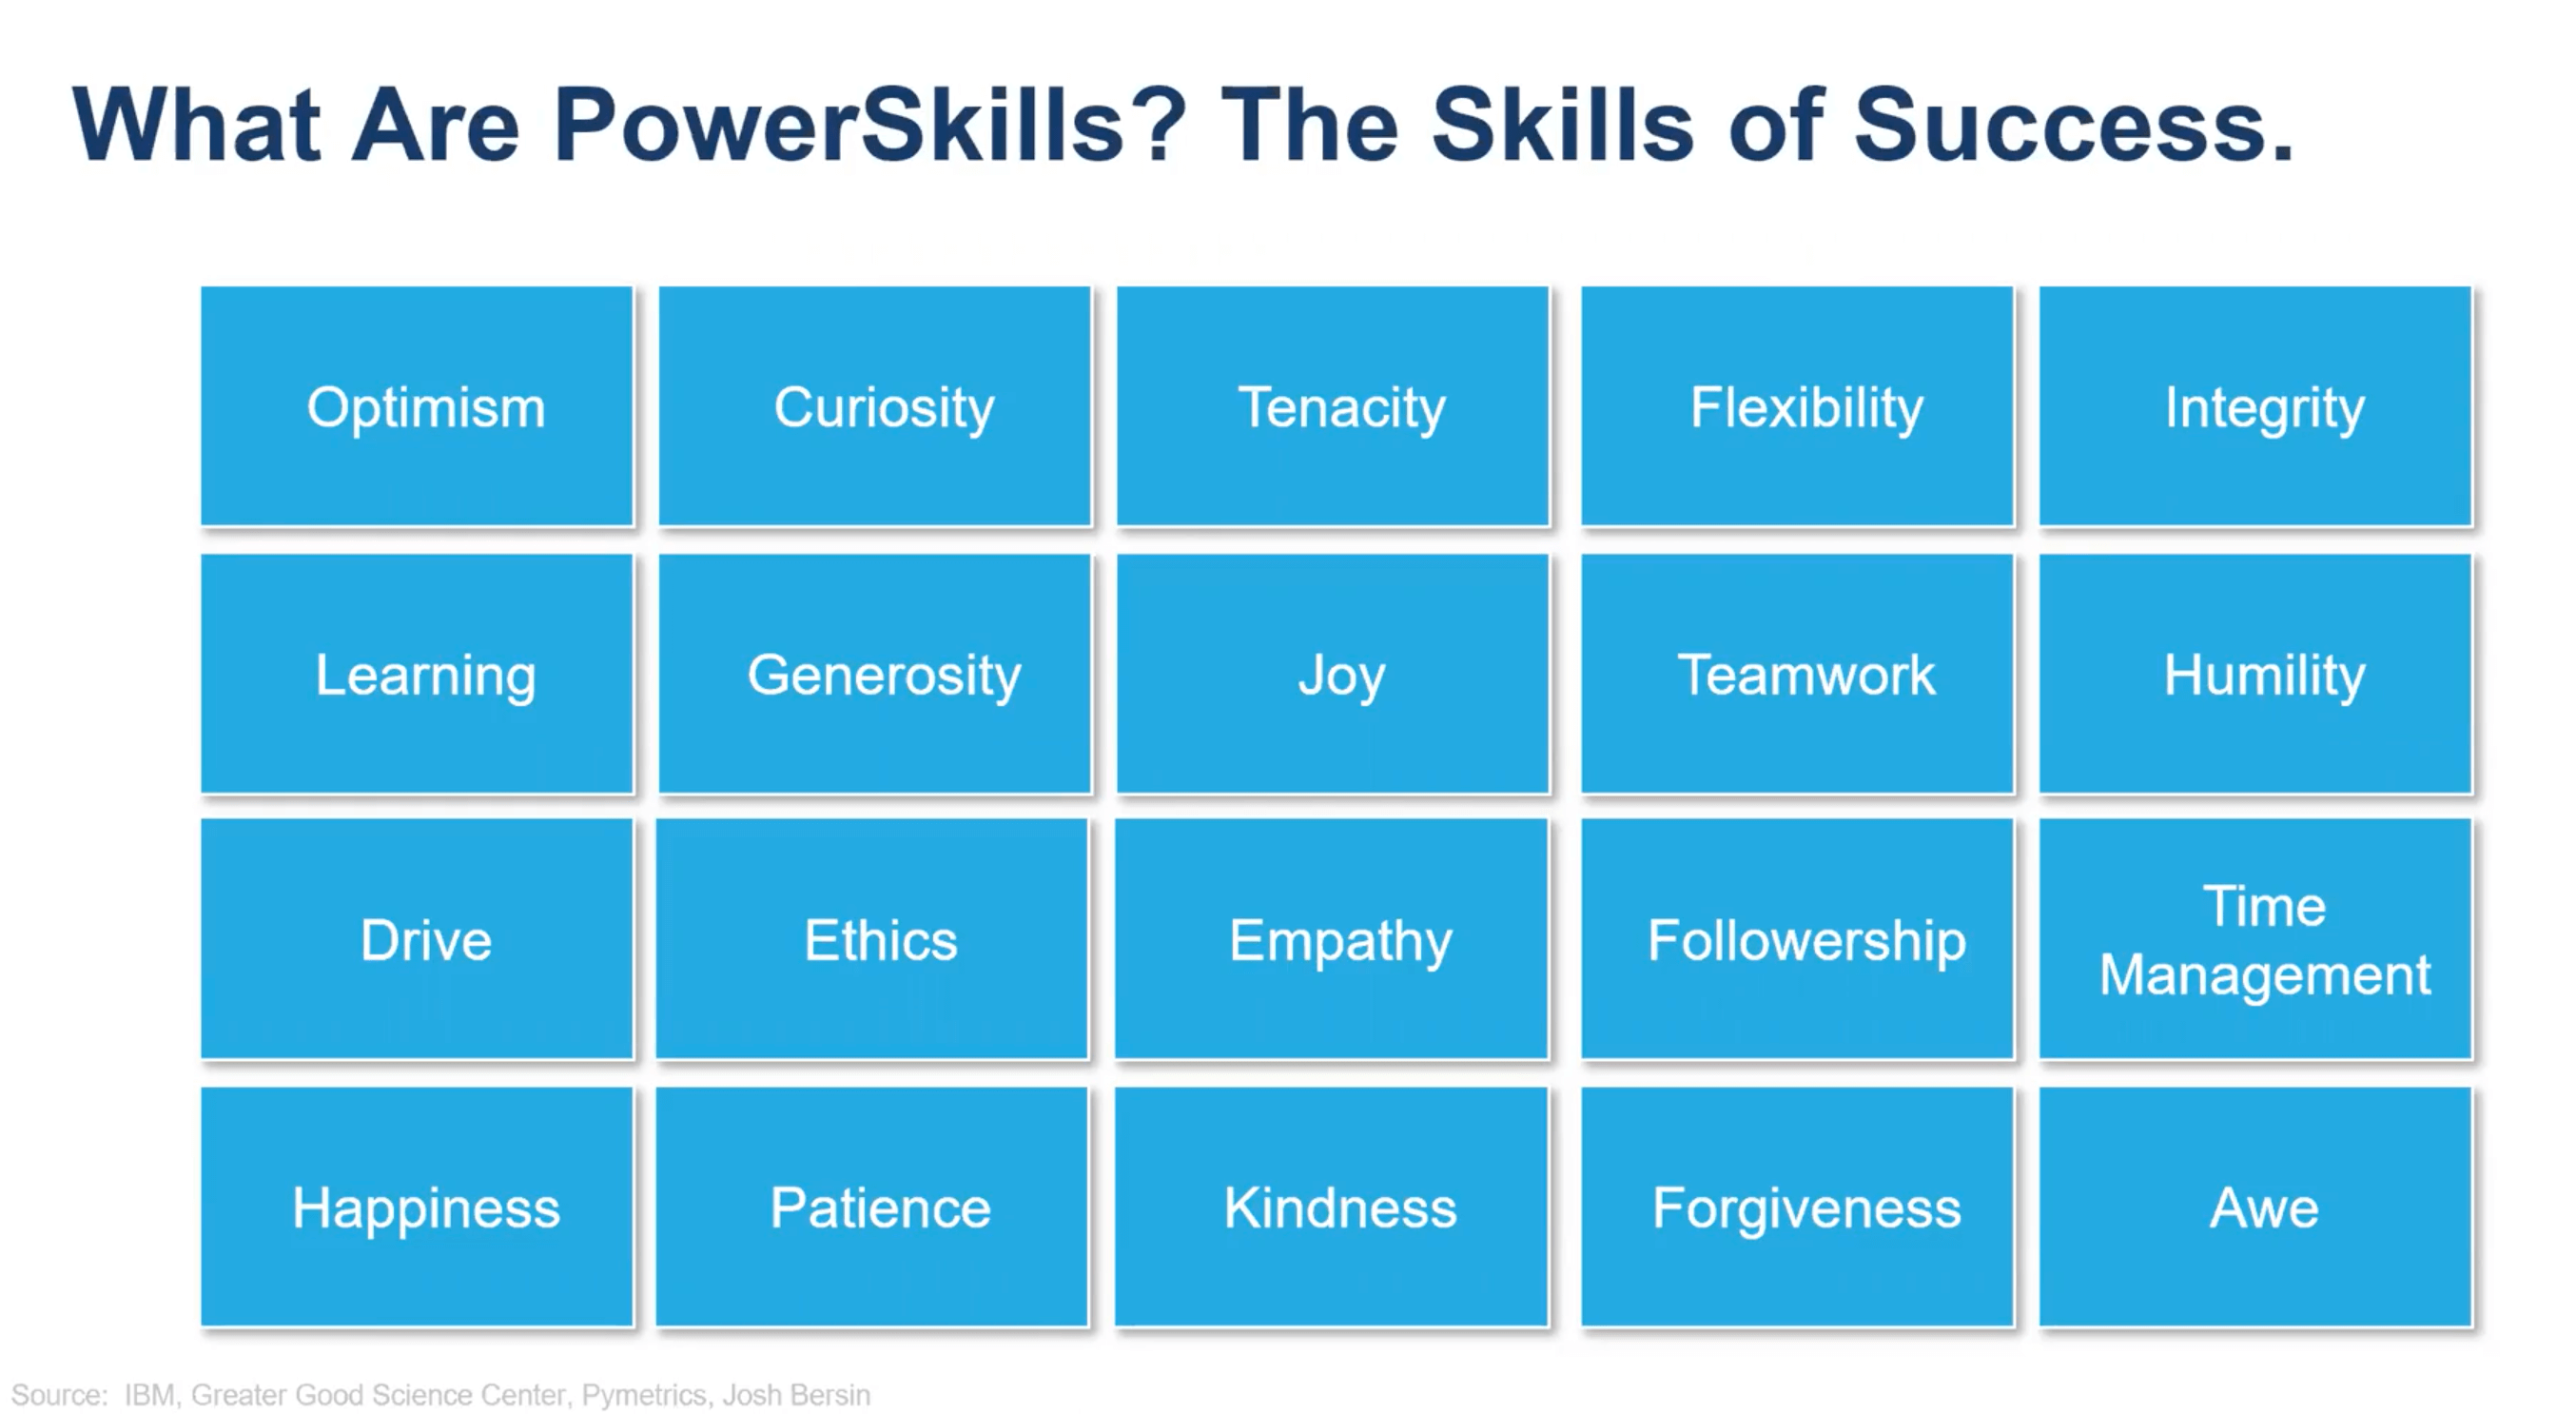 Josh Bersin - PowerSkills are the skills of success